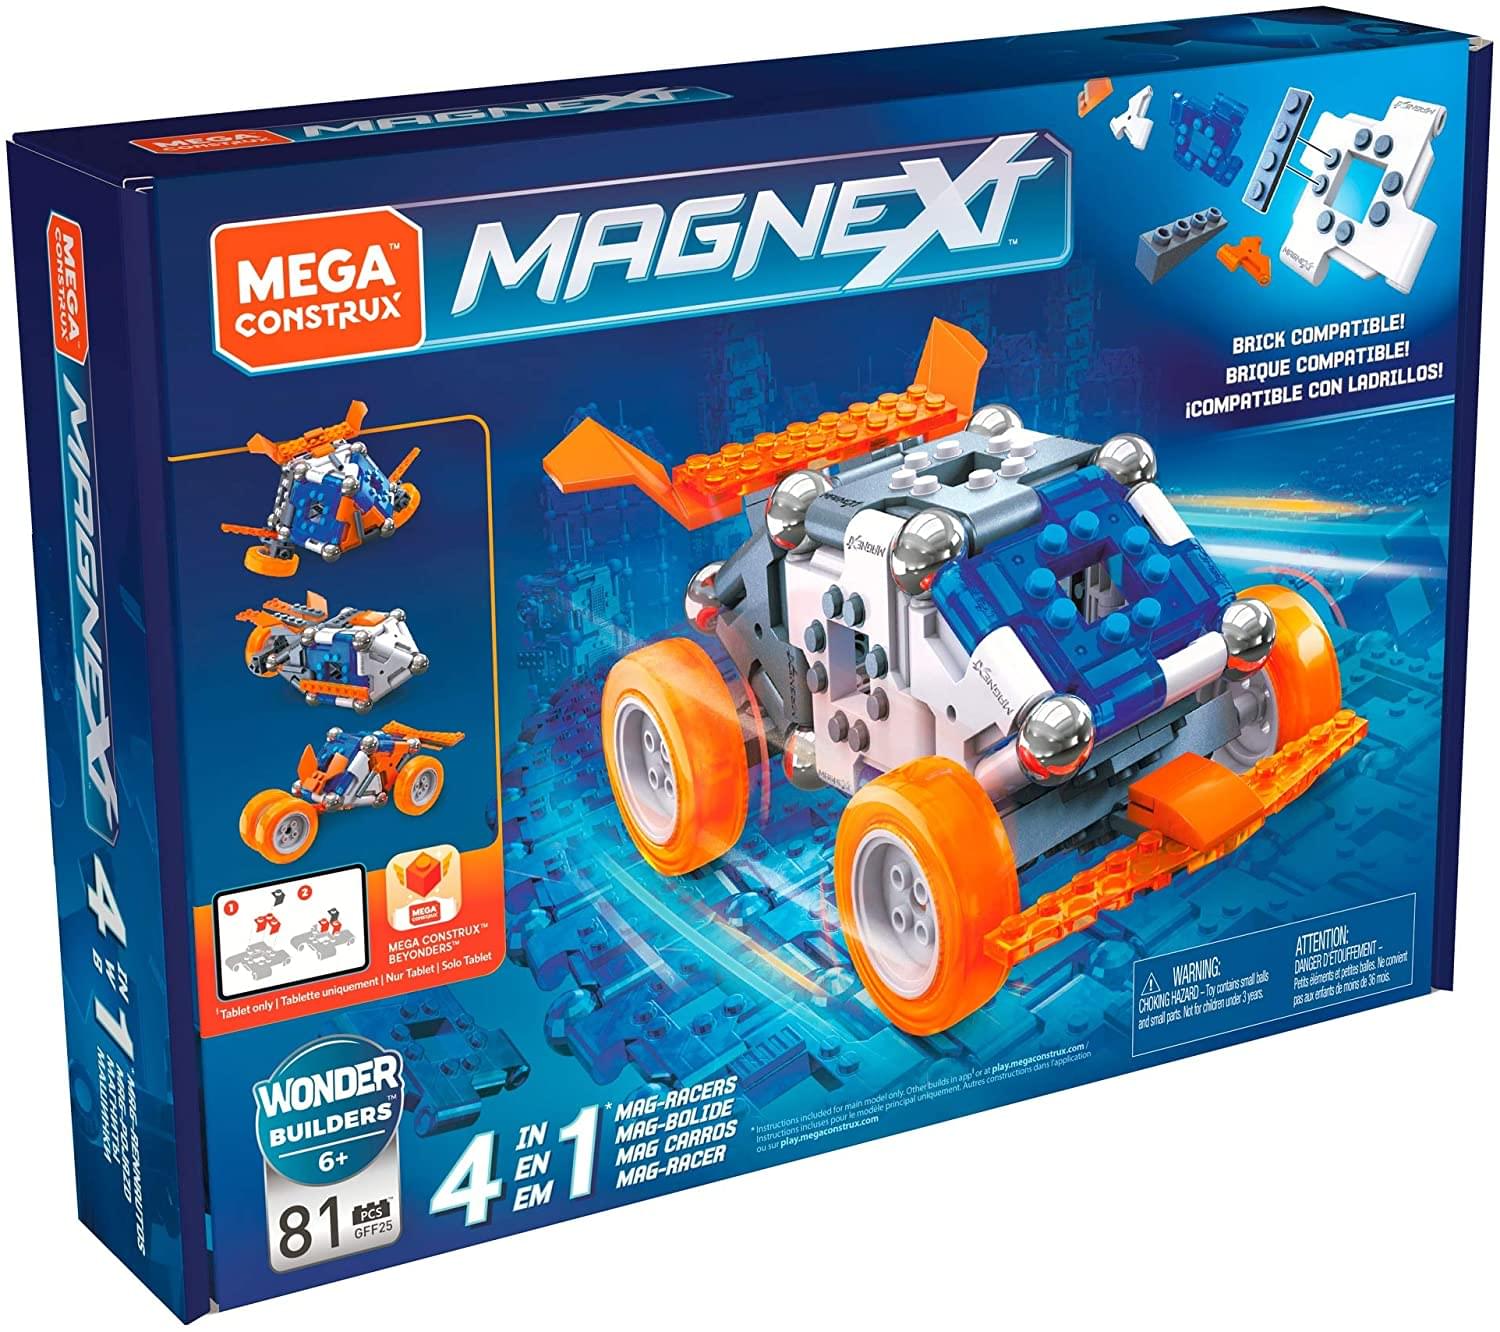 Mega Construx Magnext 4 in 1 Mag Racers Building Set